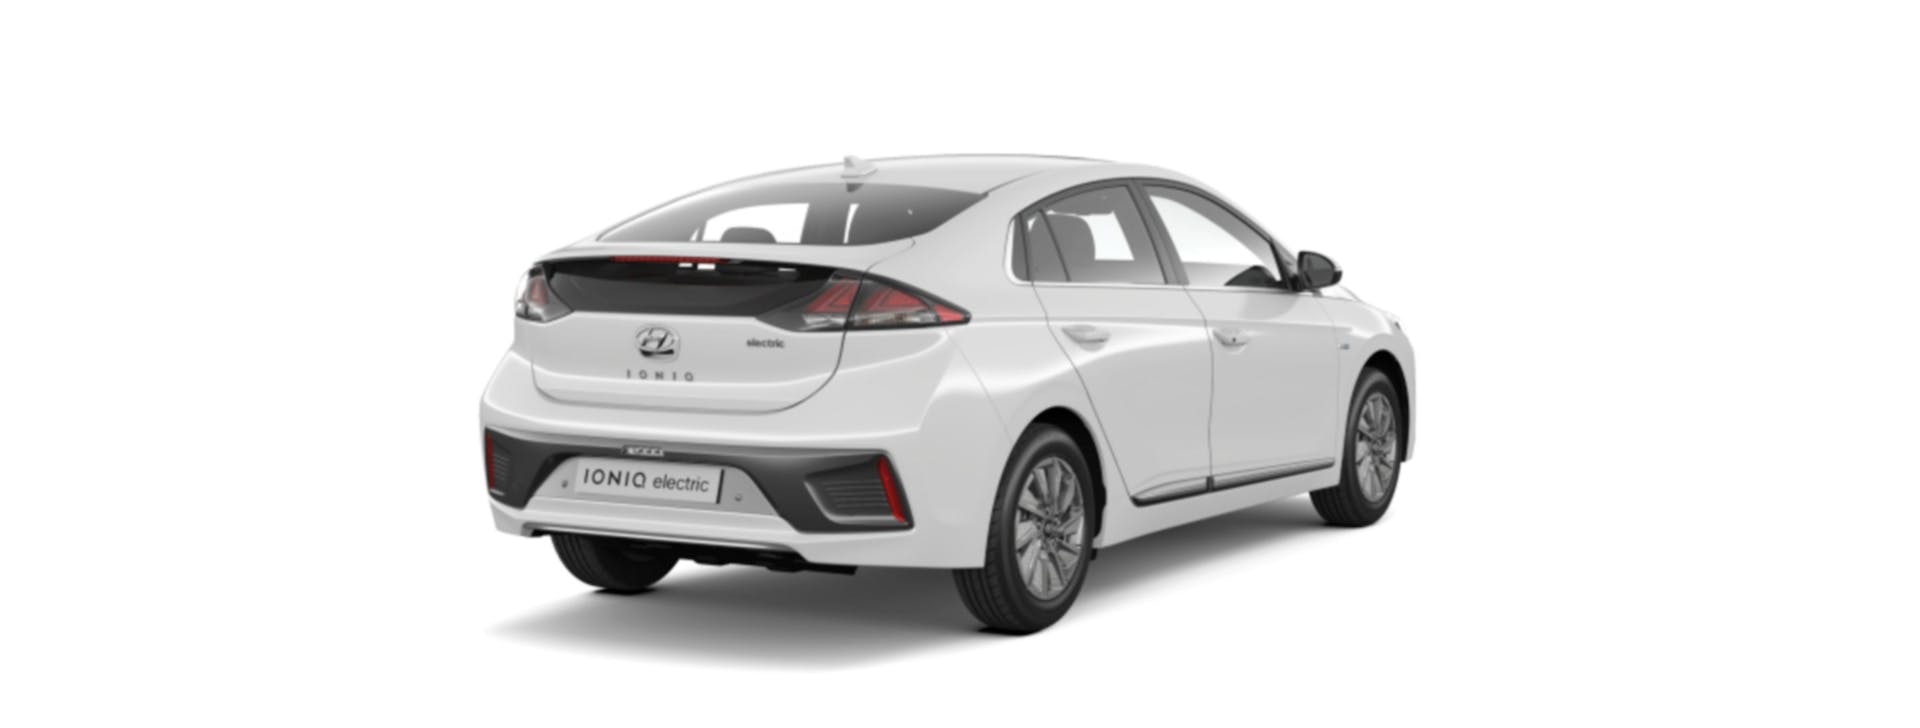 Avis Hyundai Ionic plug-in